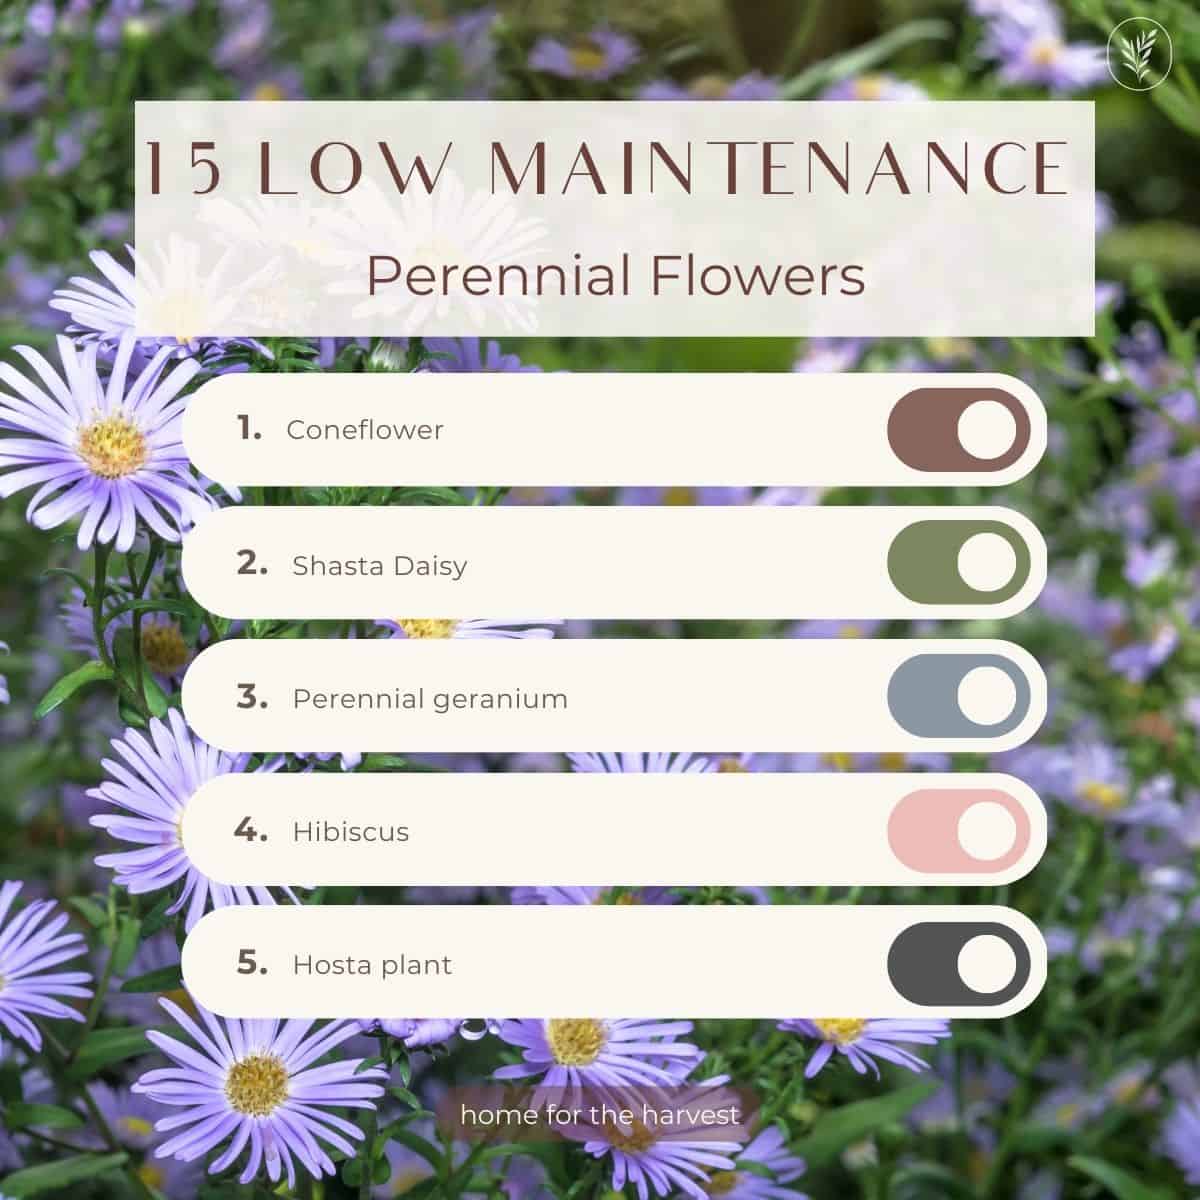 15 low maintenance perennial flowers - instagram via @home4theharvest